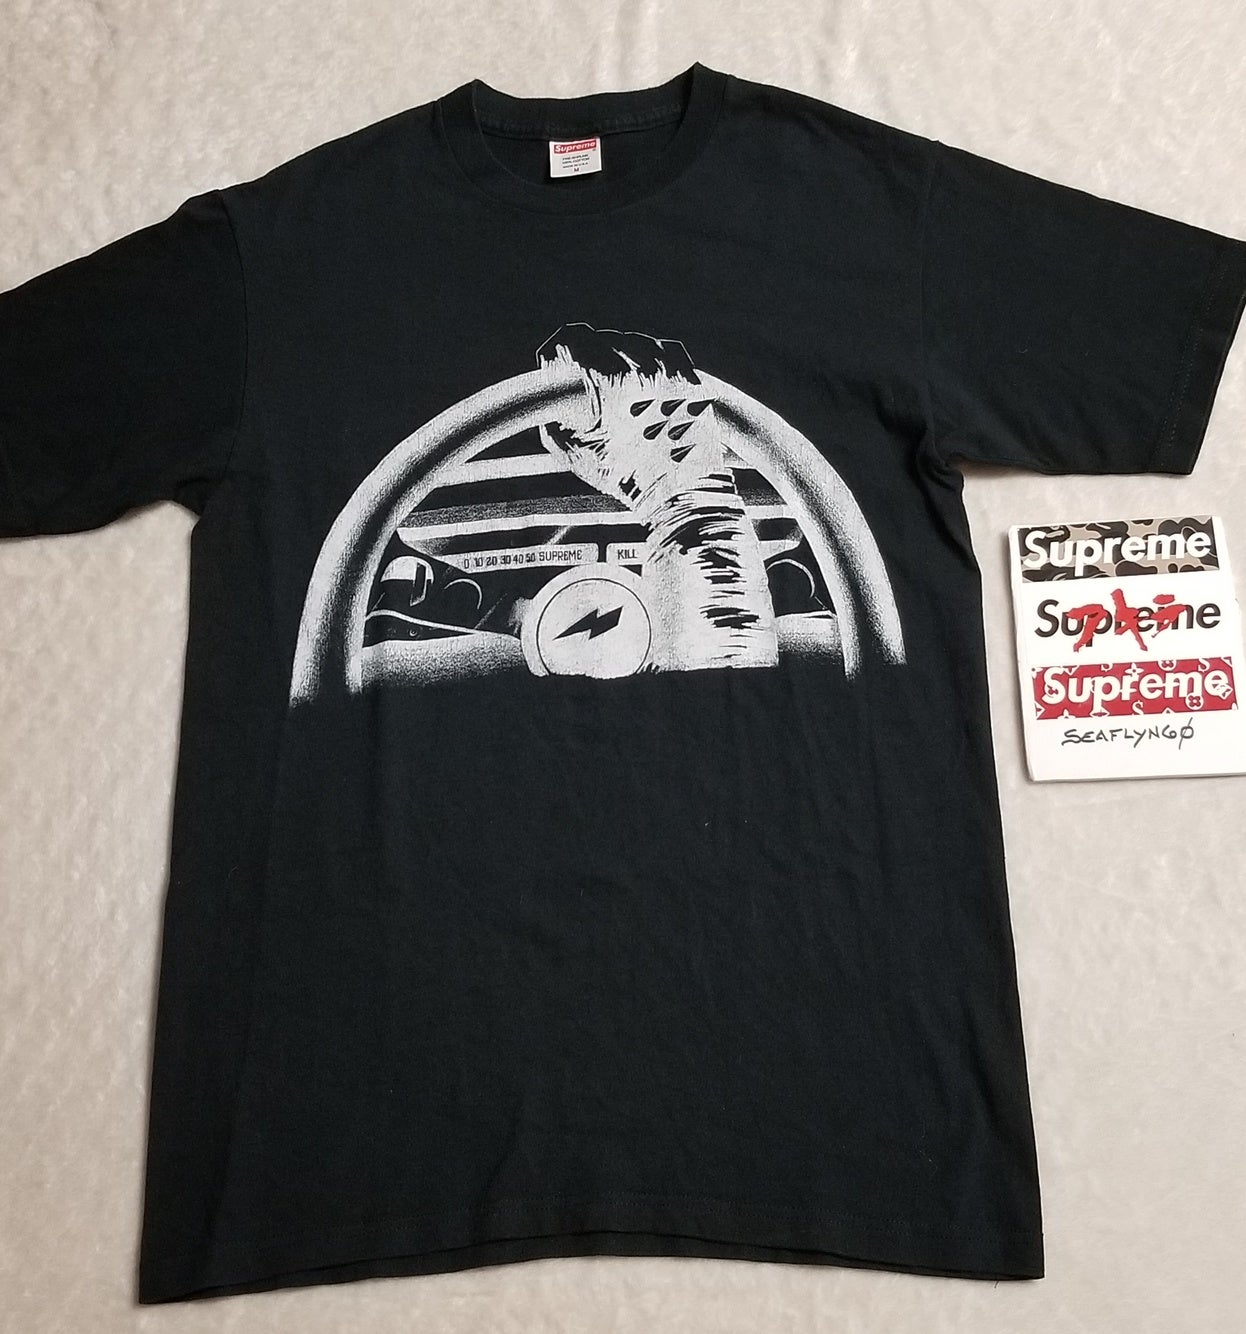 Supreme SS08 Mad Max Tee Size M Medium Black Graphic T Shirt 100